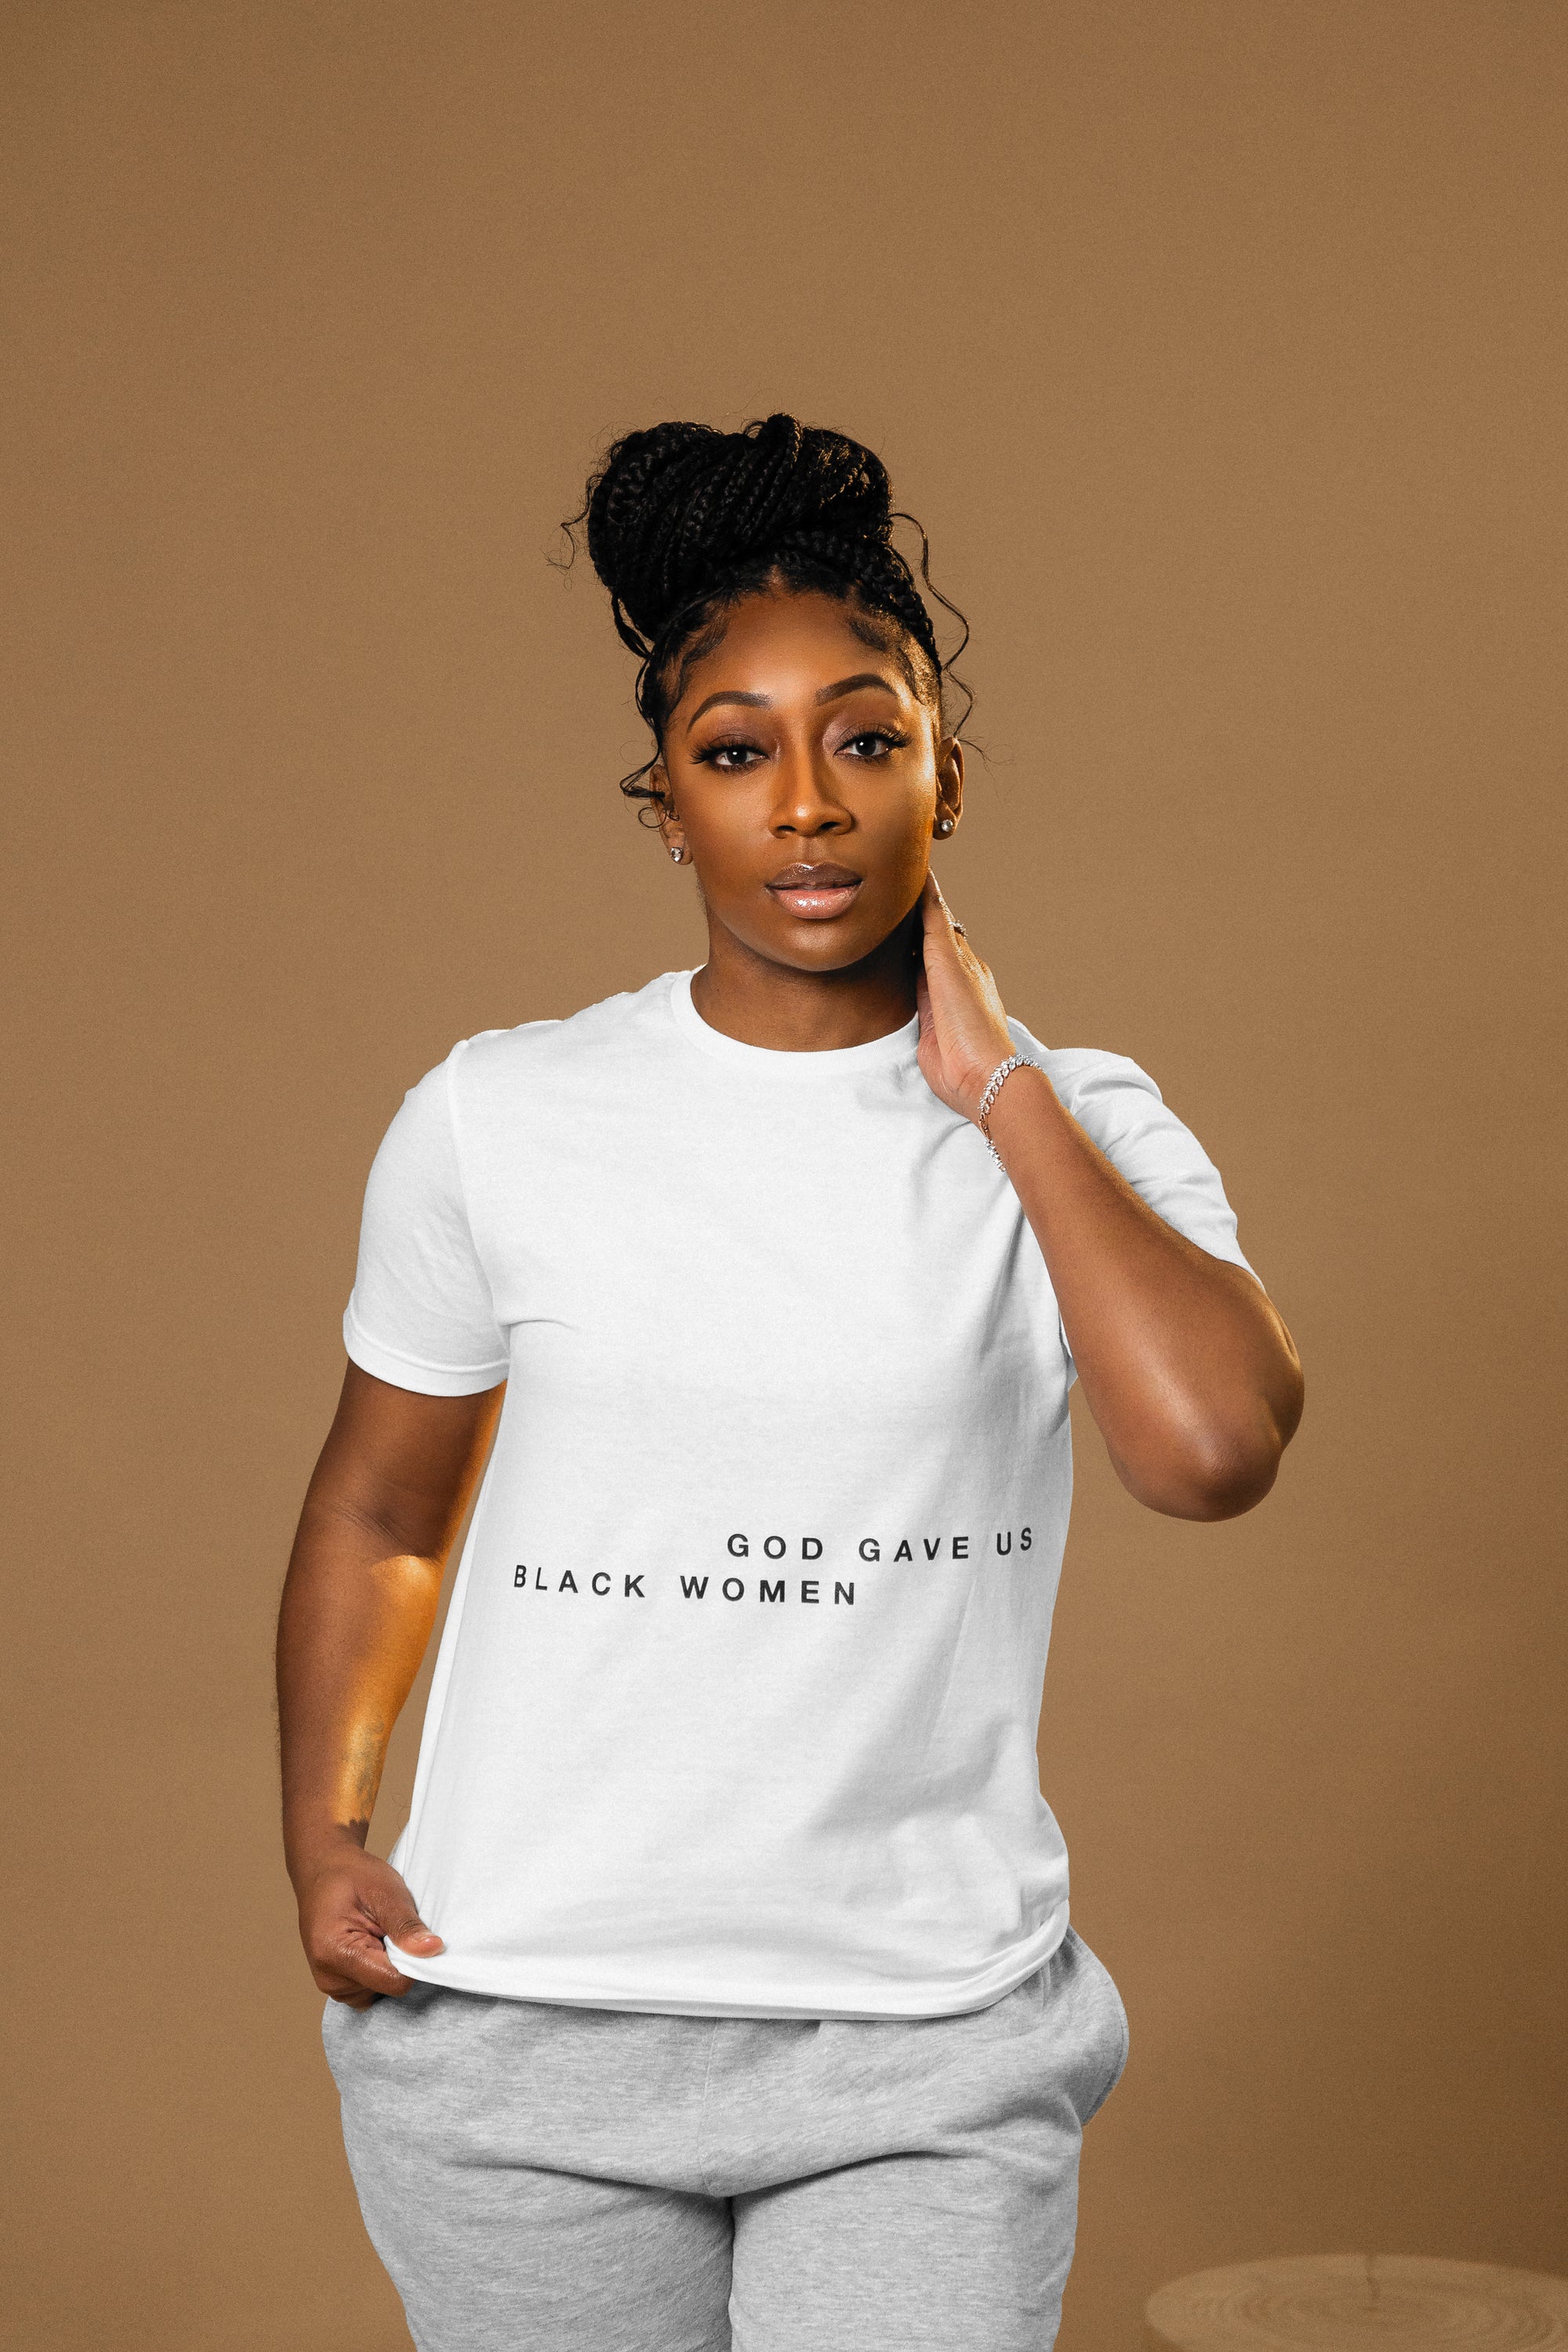 "GOD GAVE US BLACK WOMEN" T-SHIRT